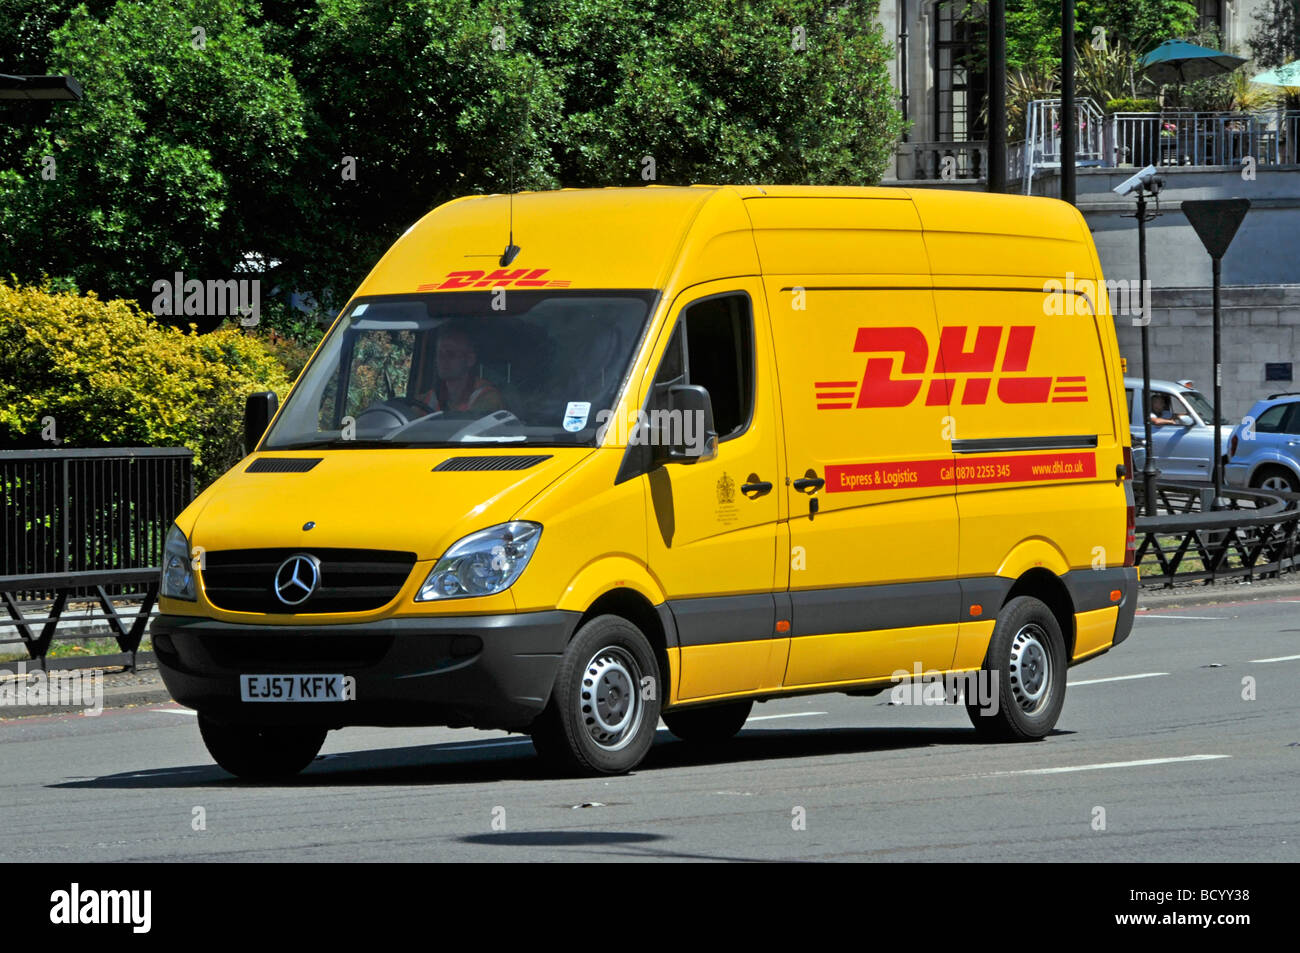 DHL Paket Lieferwagen in Park Lane in London Stockfotografie - Alamy